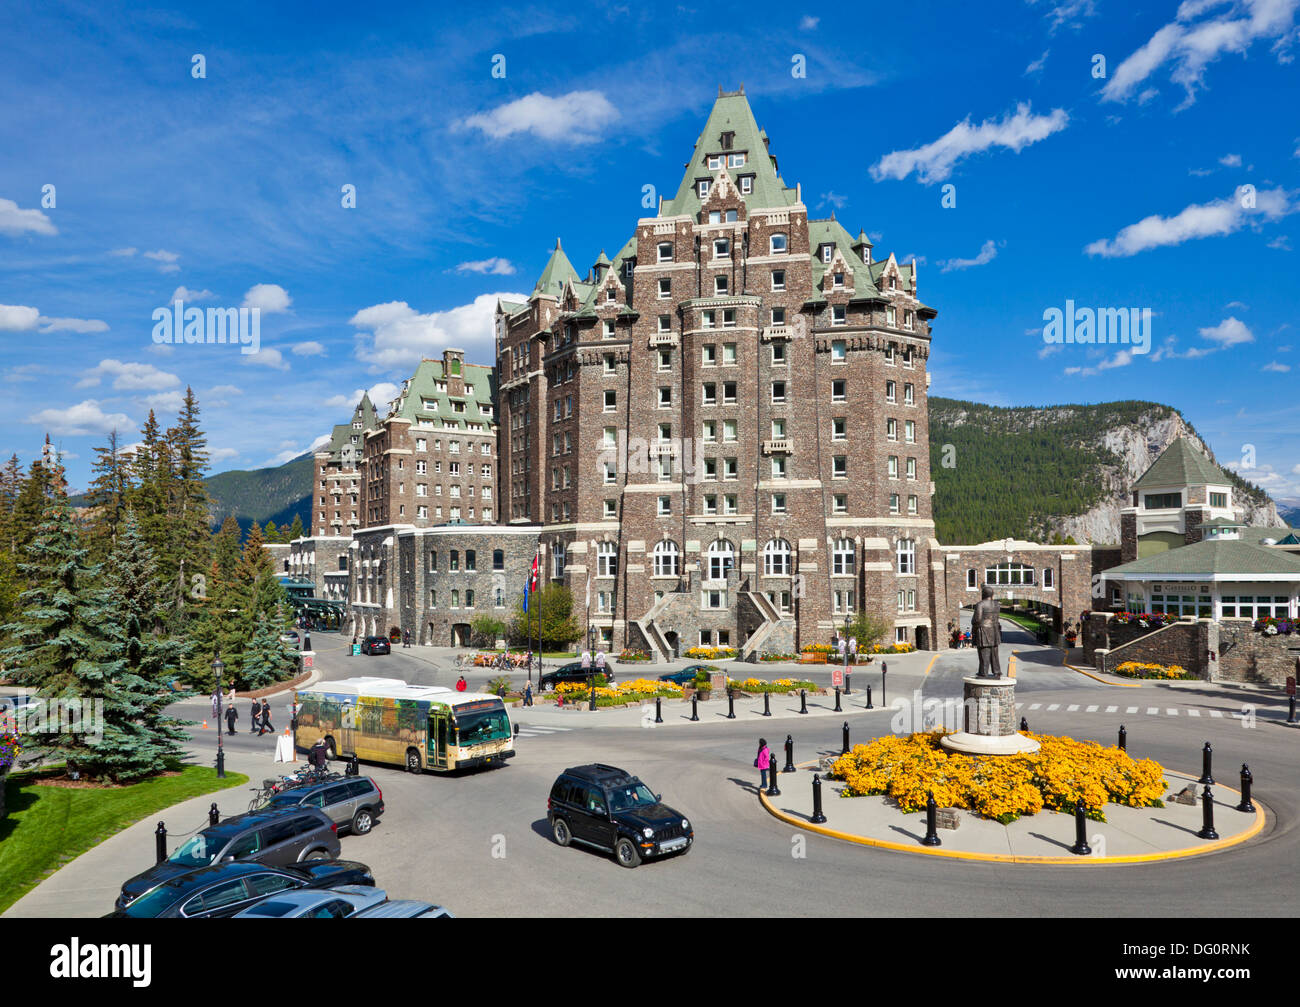 Das Fairmont Banff Springs Hotel Banff Gemeinde Banff national park Alberta Kanada Canadian rockies Stockfoto